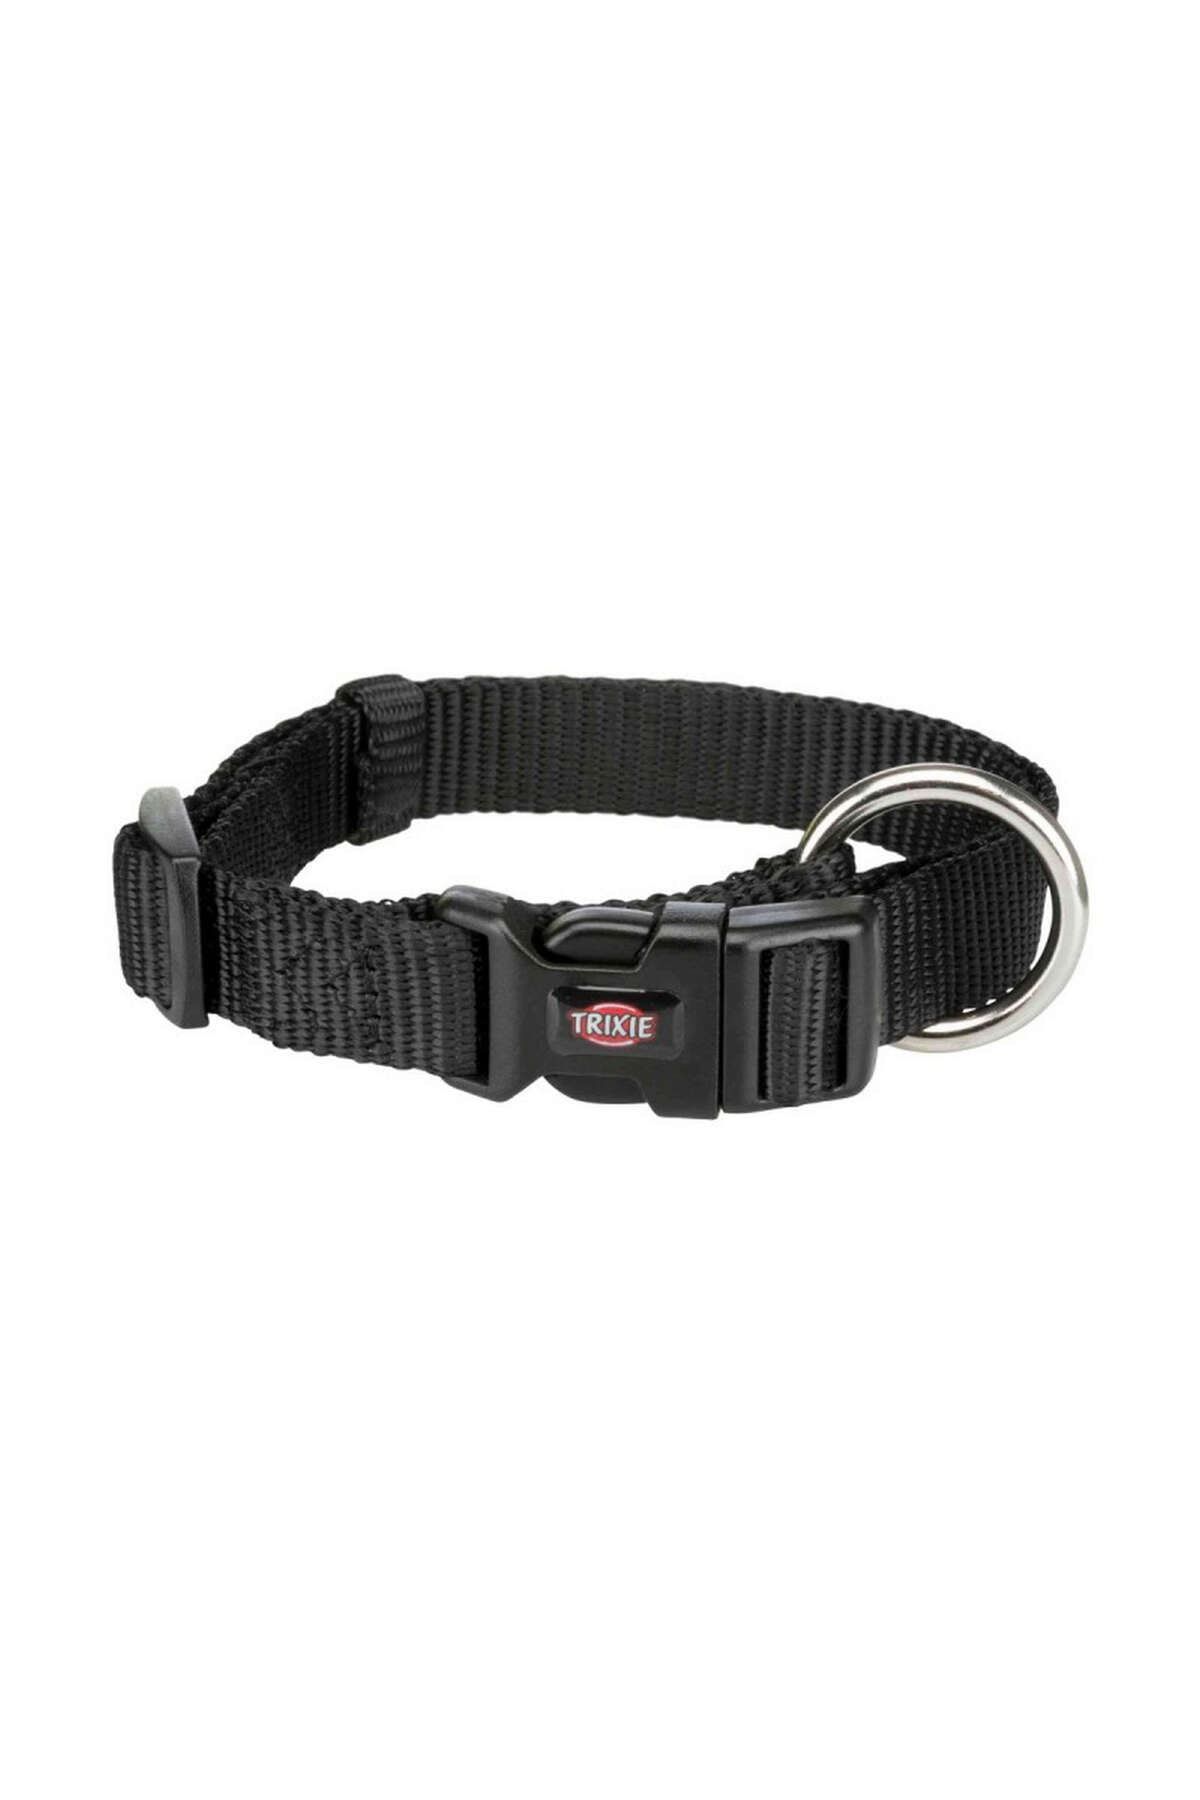 Trixie Dog Premium Collar S-m مشکی - Farmapets 902051032488078